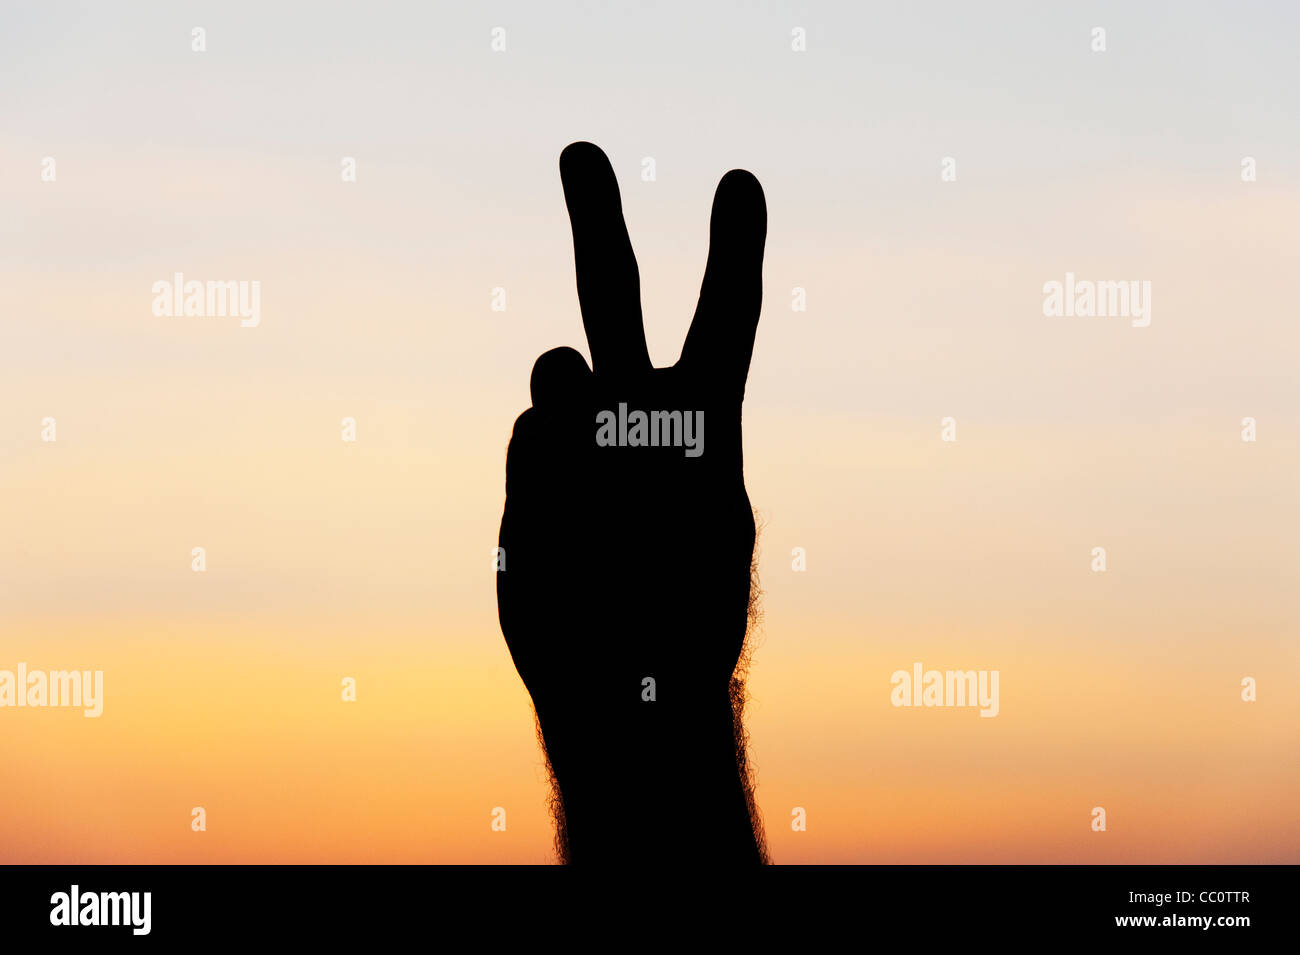 Hand Peace sign silhouette against sunrise sky Stock Photo